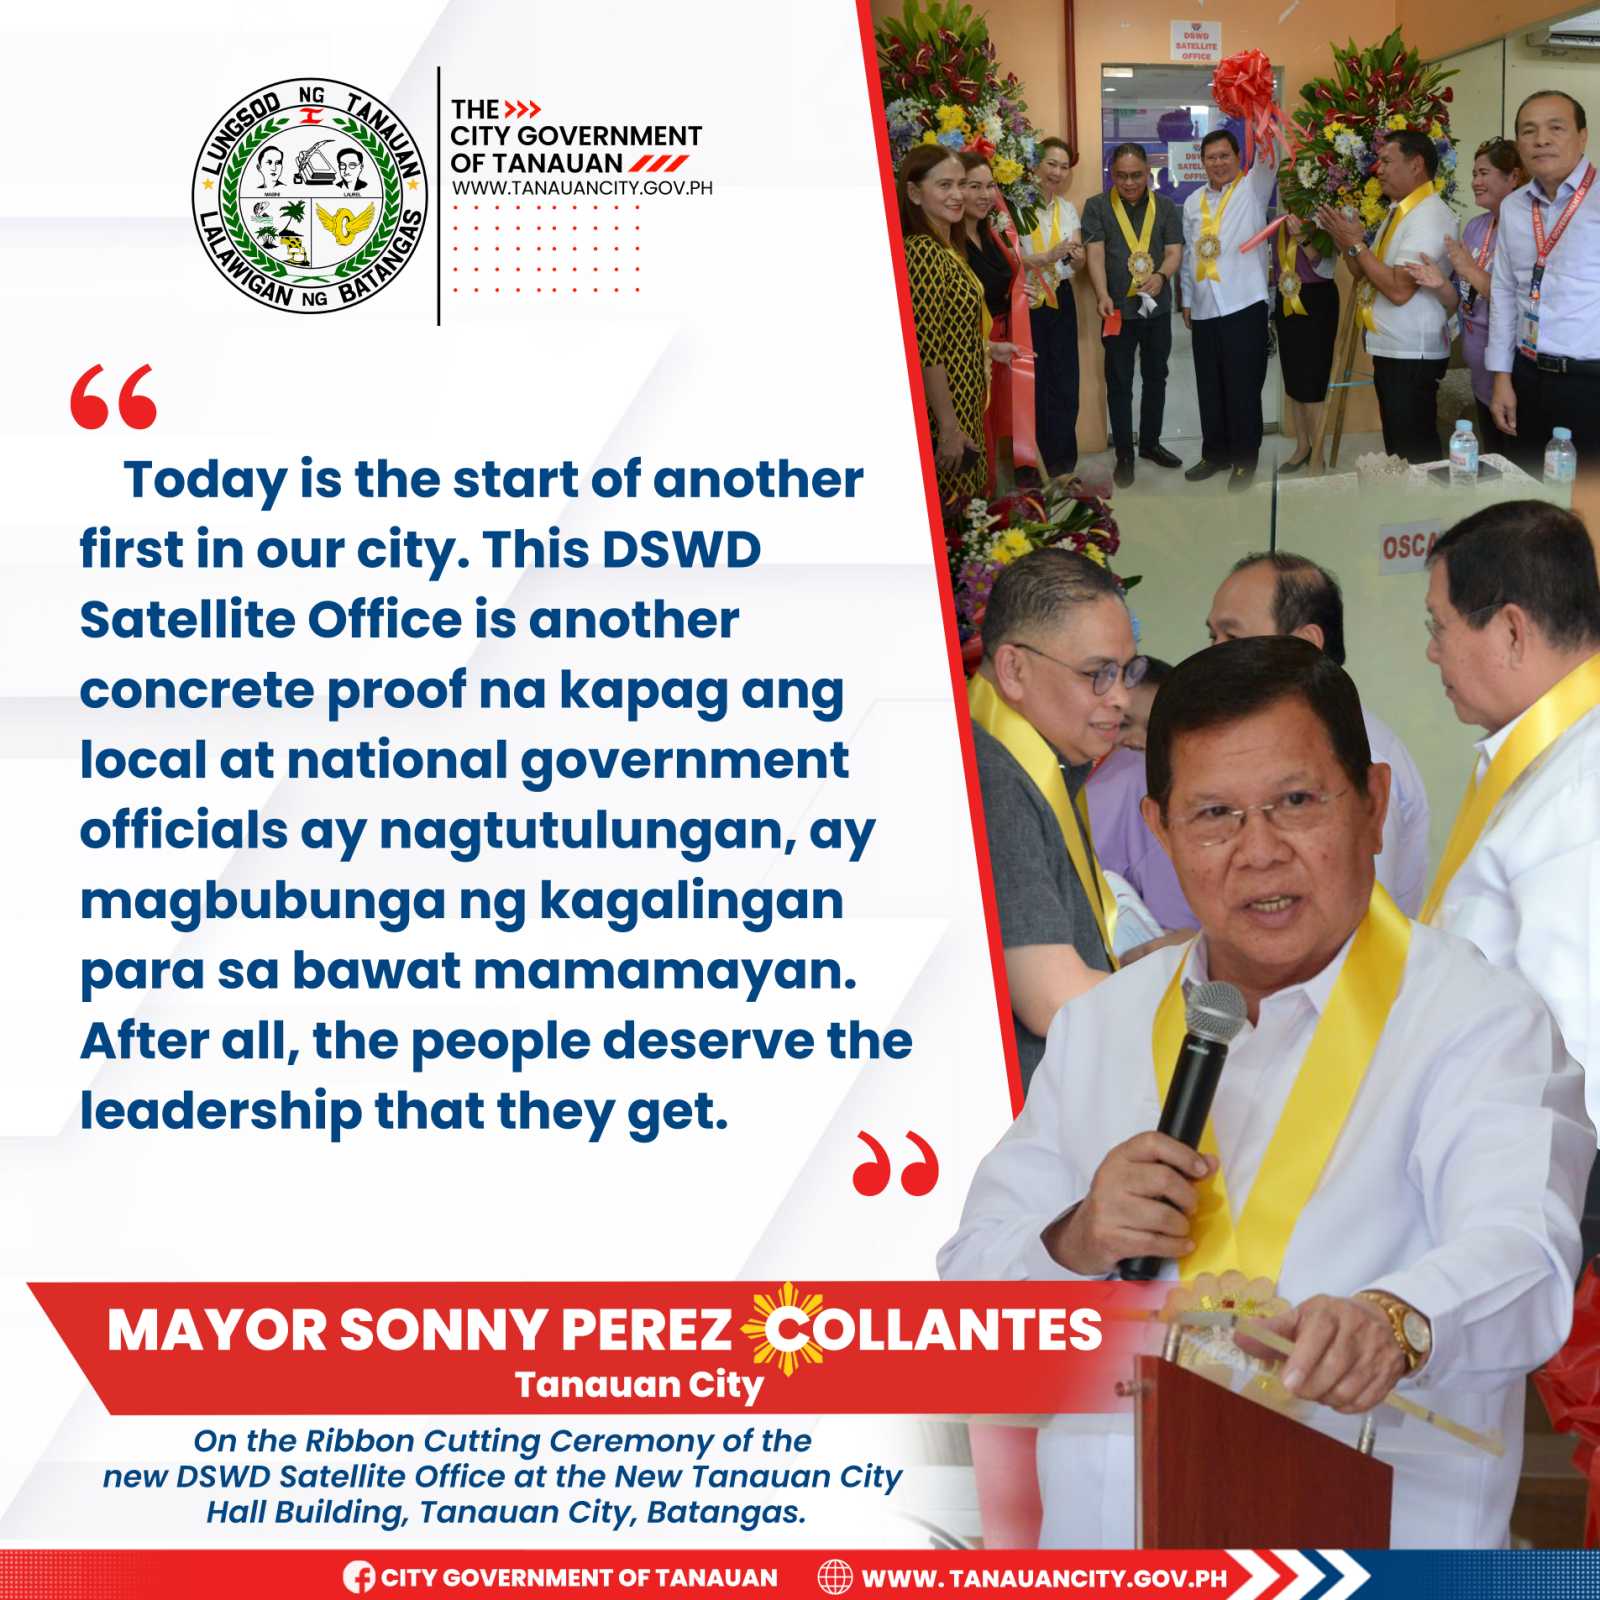 Lungsod ng Tanauan, Mayor Sonny Perez Collantes